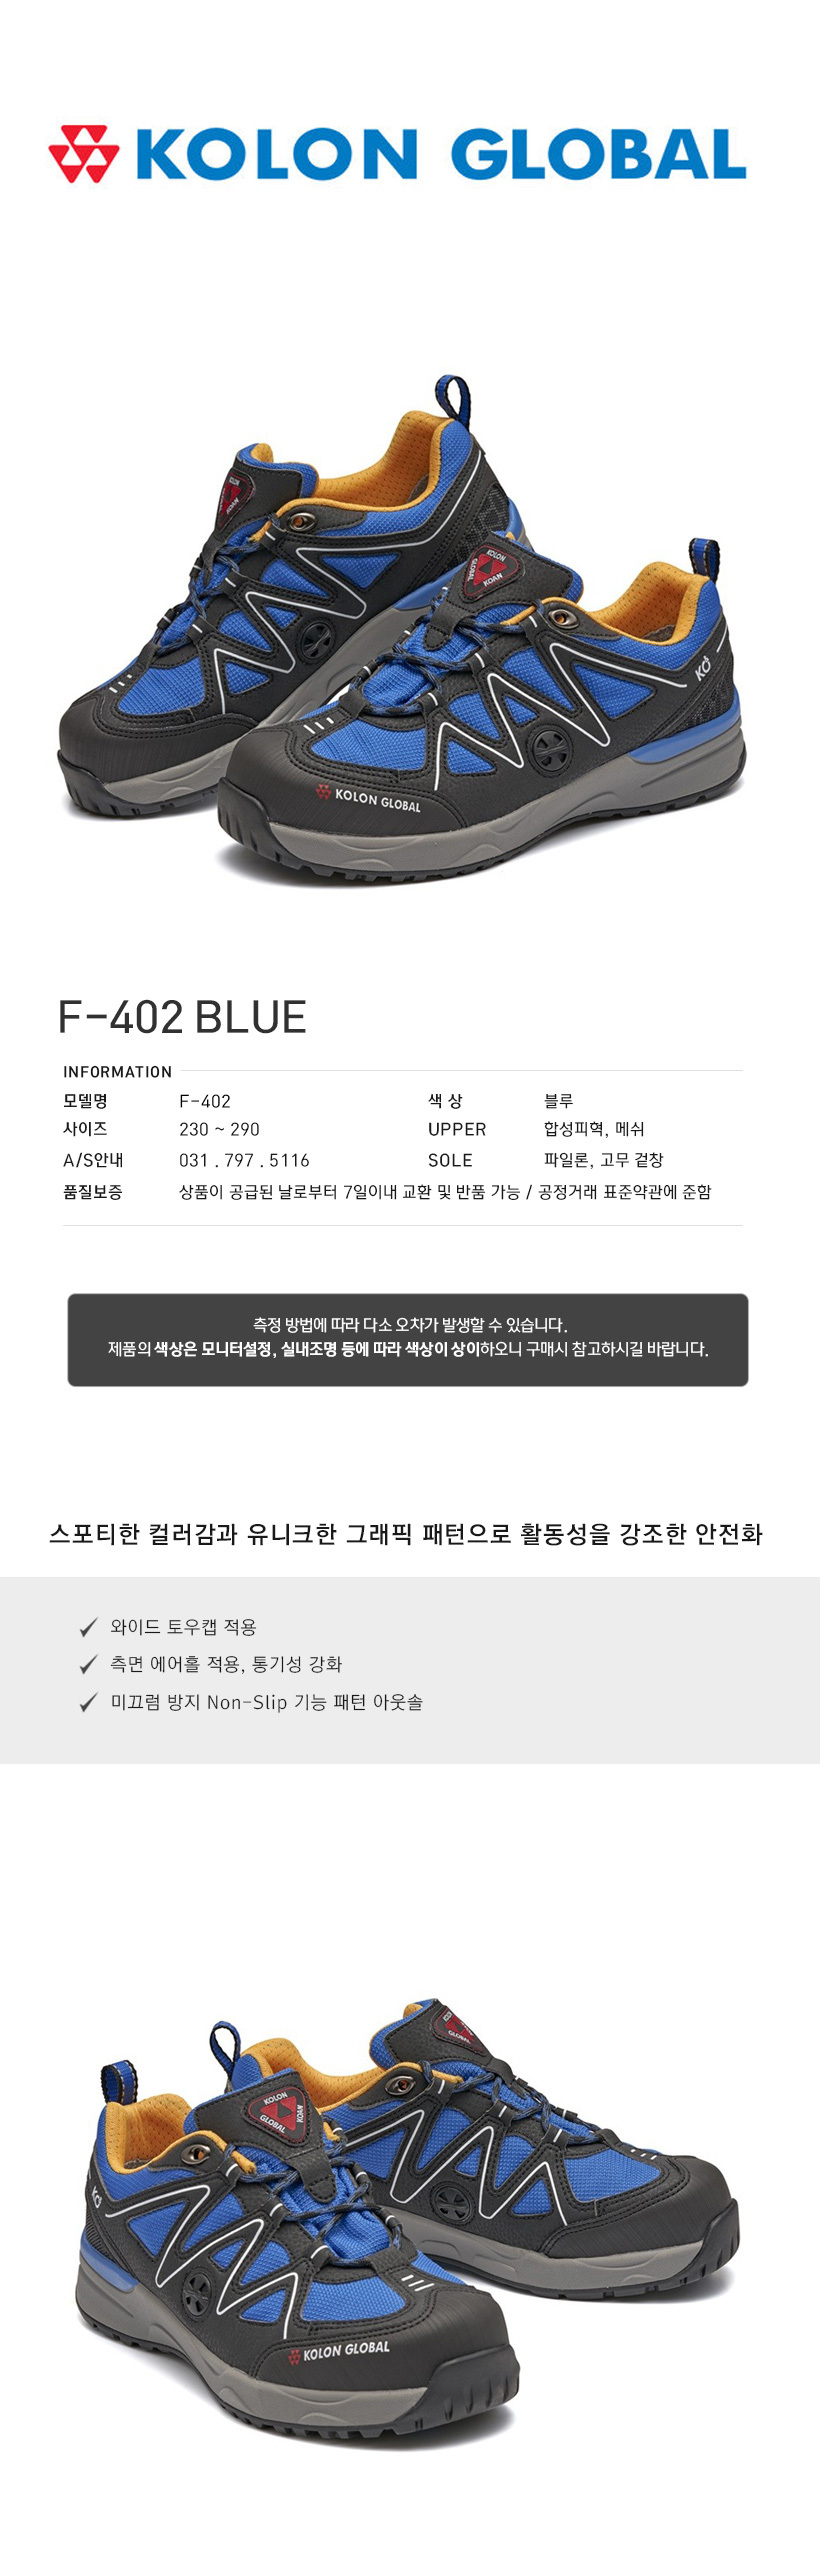 09_F-402-BLUE_01.jpg